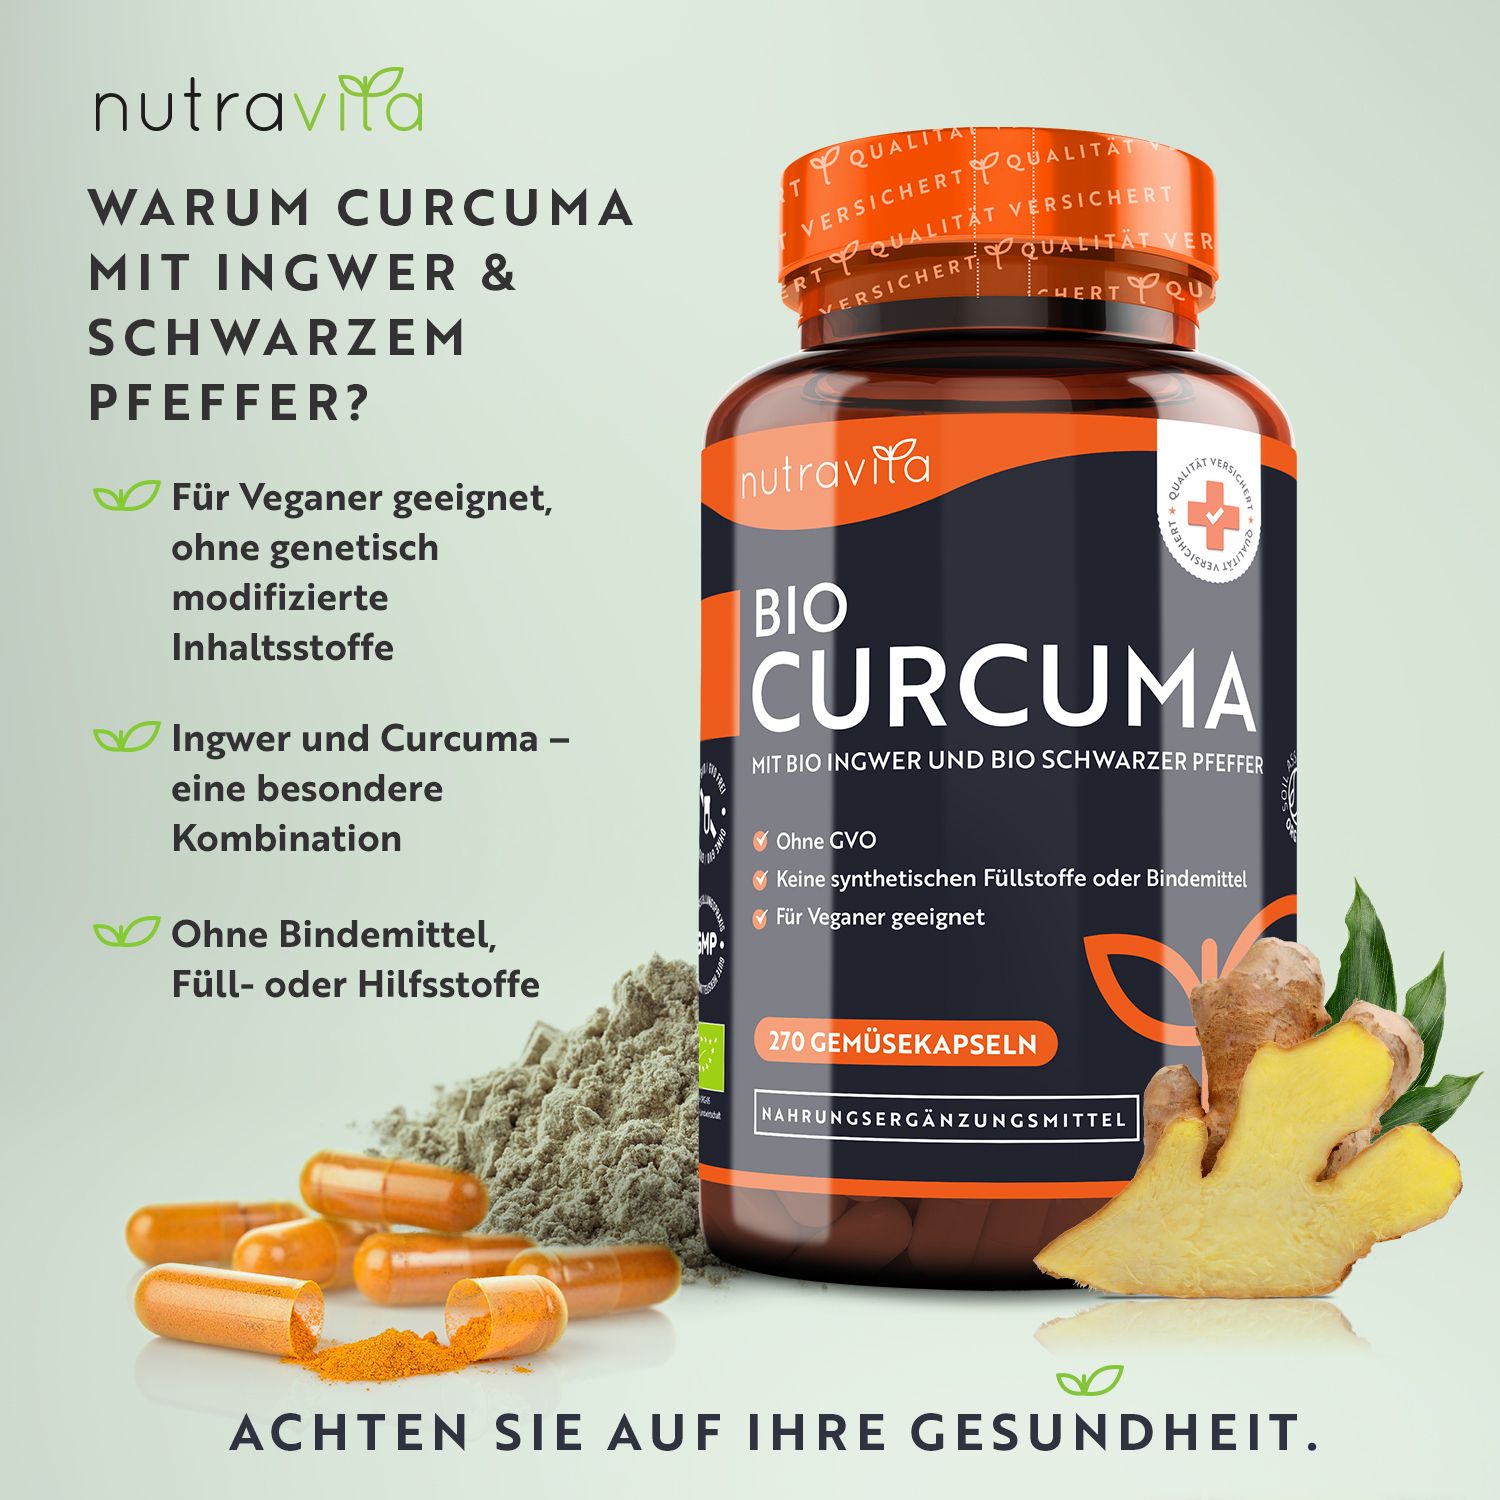 Nutravita Bio Curcuma vegan